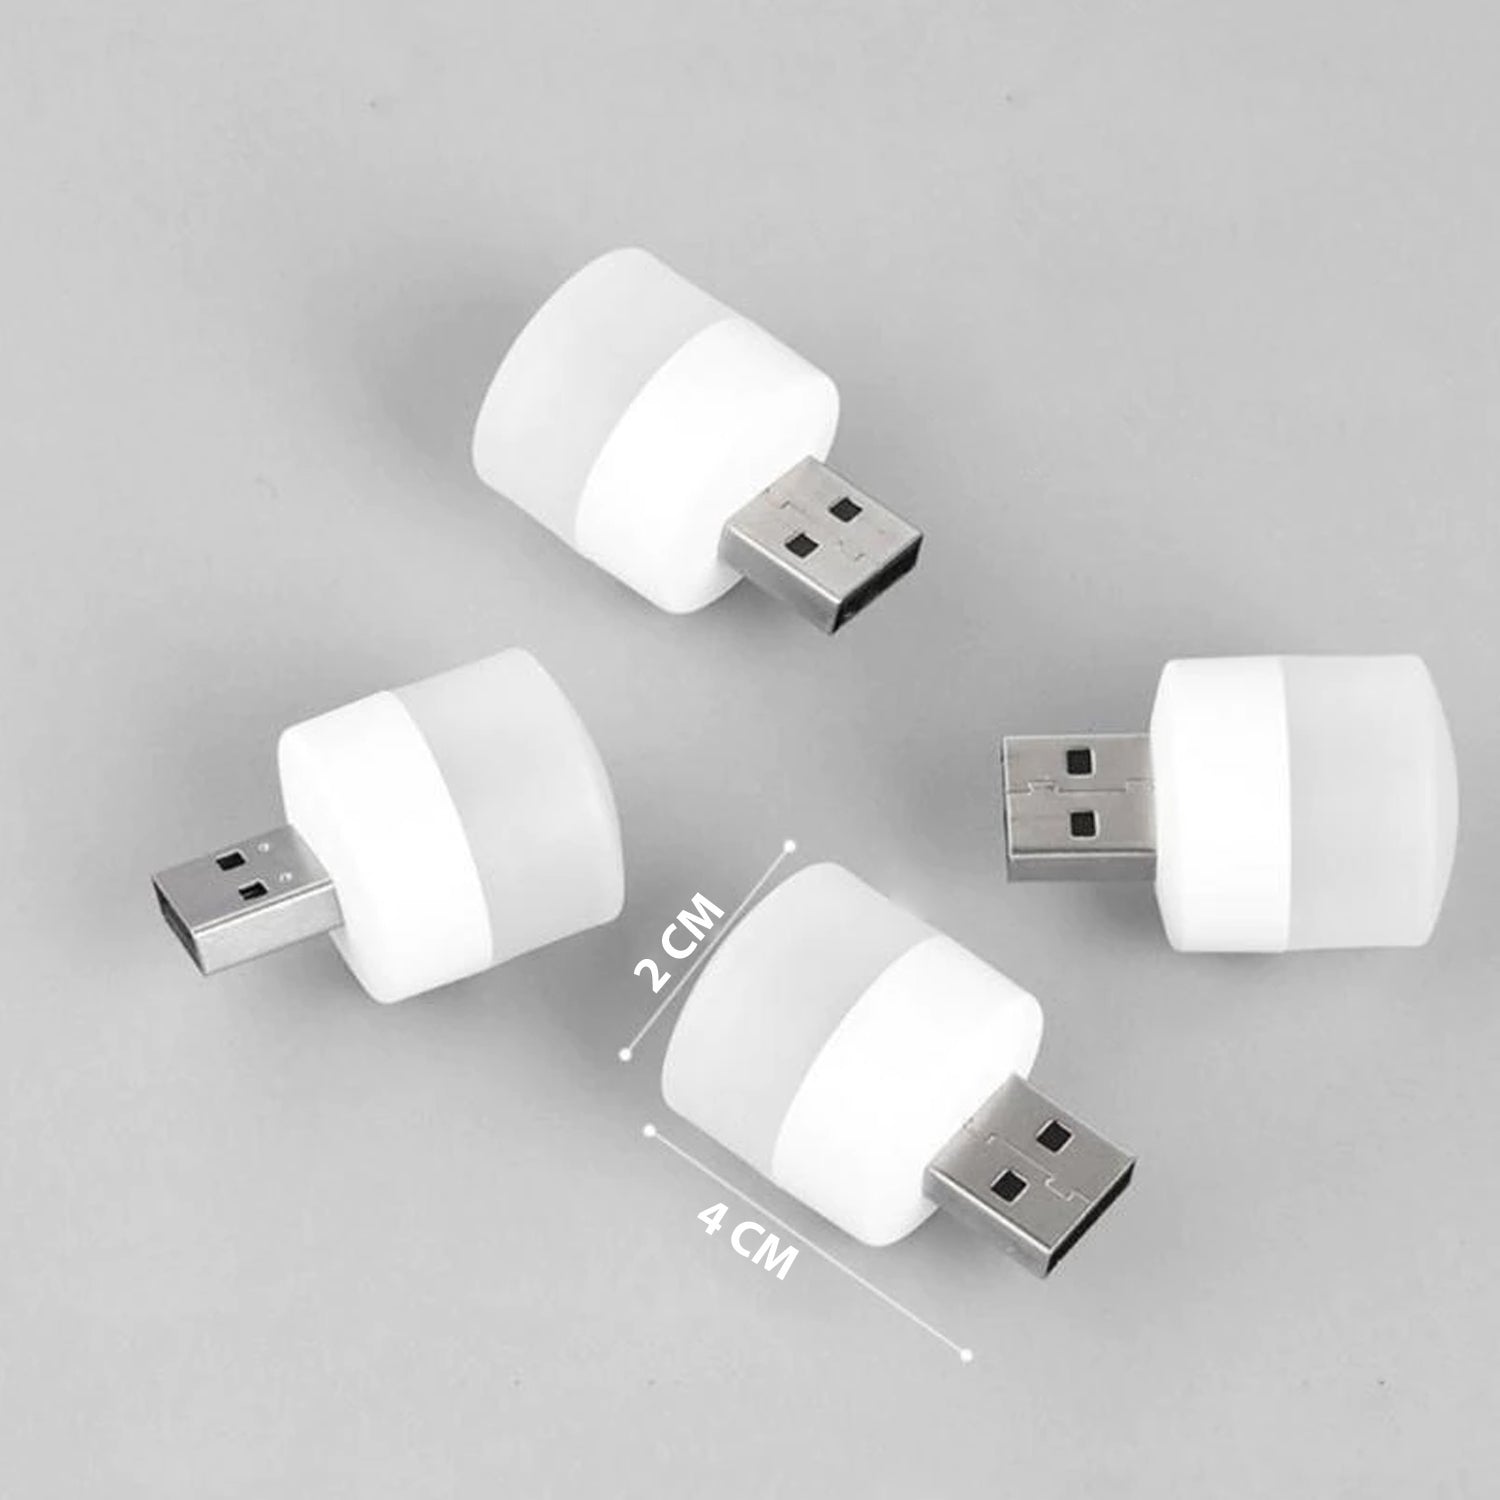 6293 USB LED LAMP Night Light, Plug in Small Led Nightlight Mini Portable for PC and Laptop. 